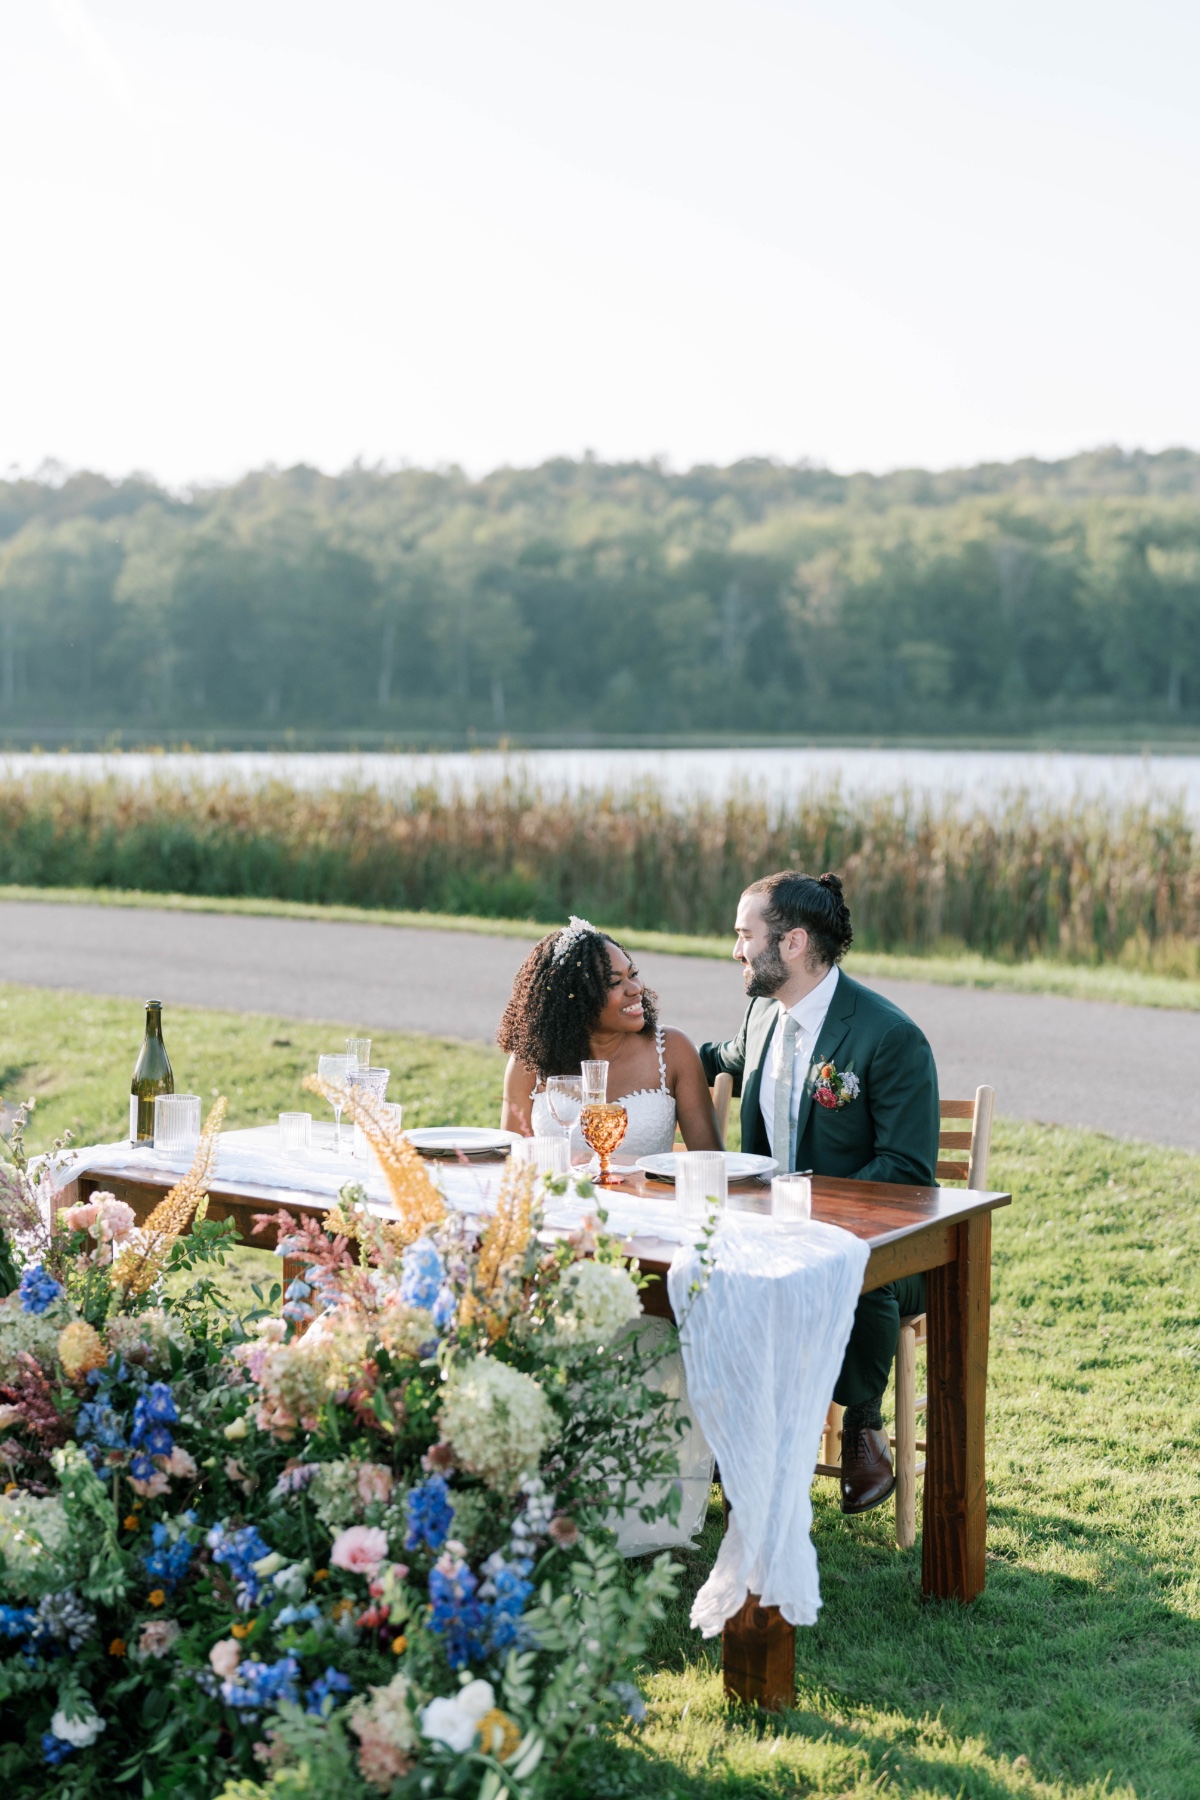 A Pennsylvania wedding that brought vintage luxury to the lake